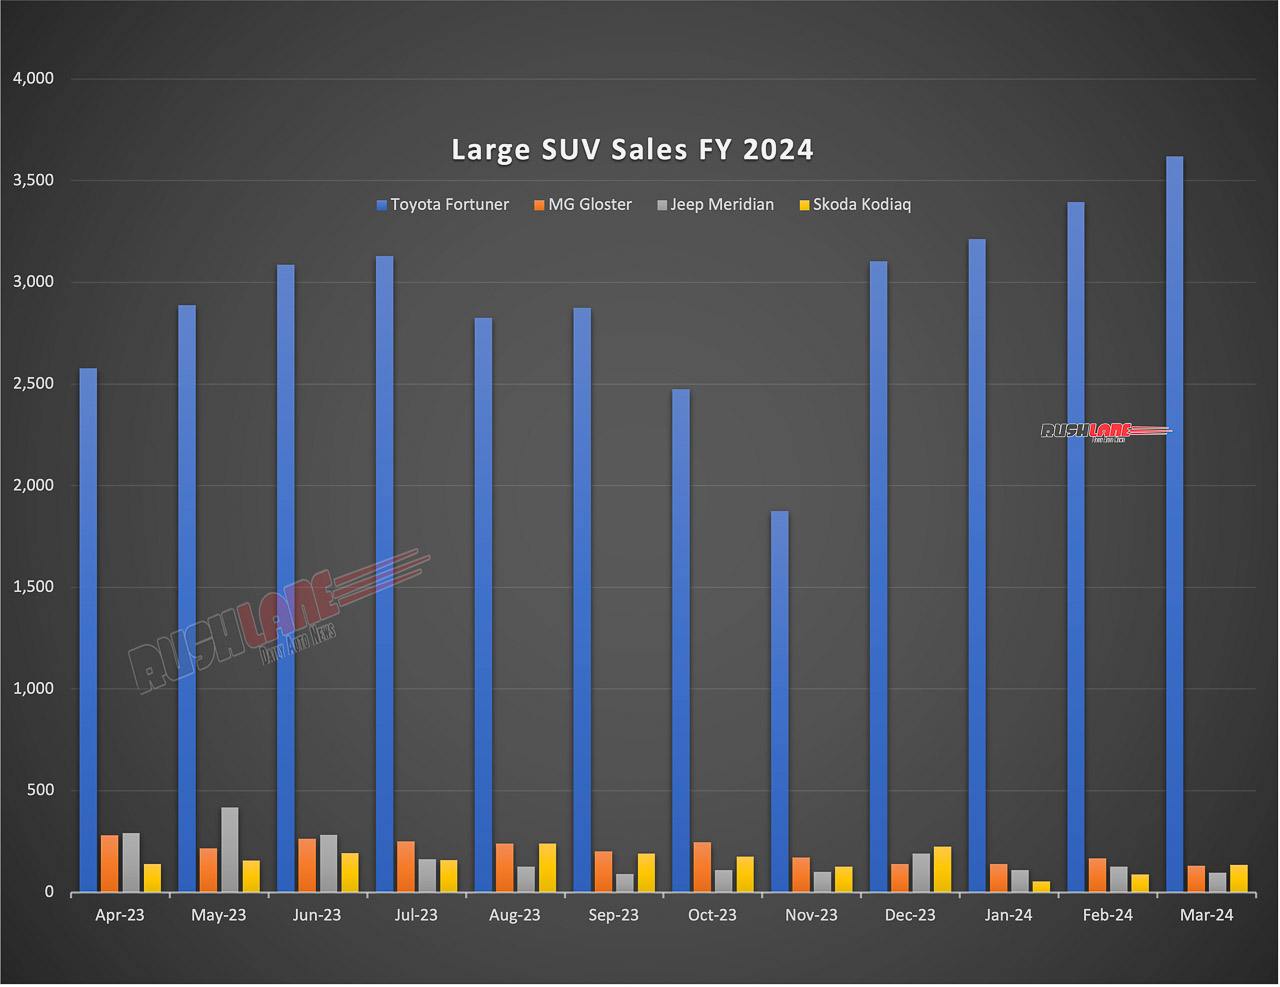 Large SUV Sales FY 2024